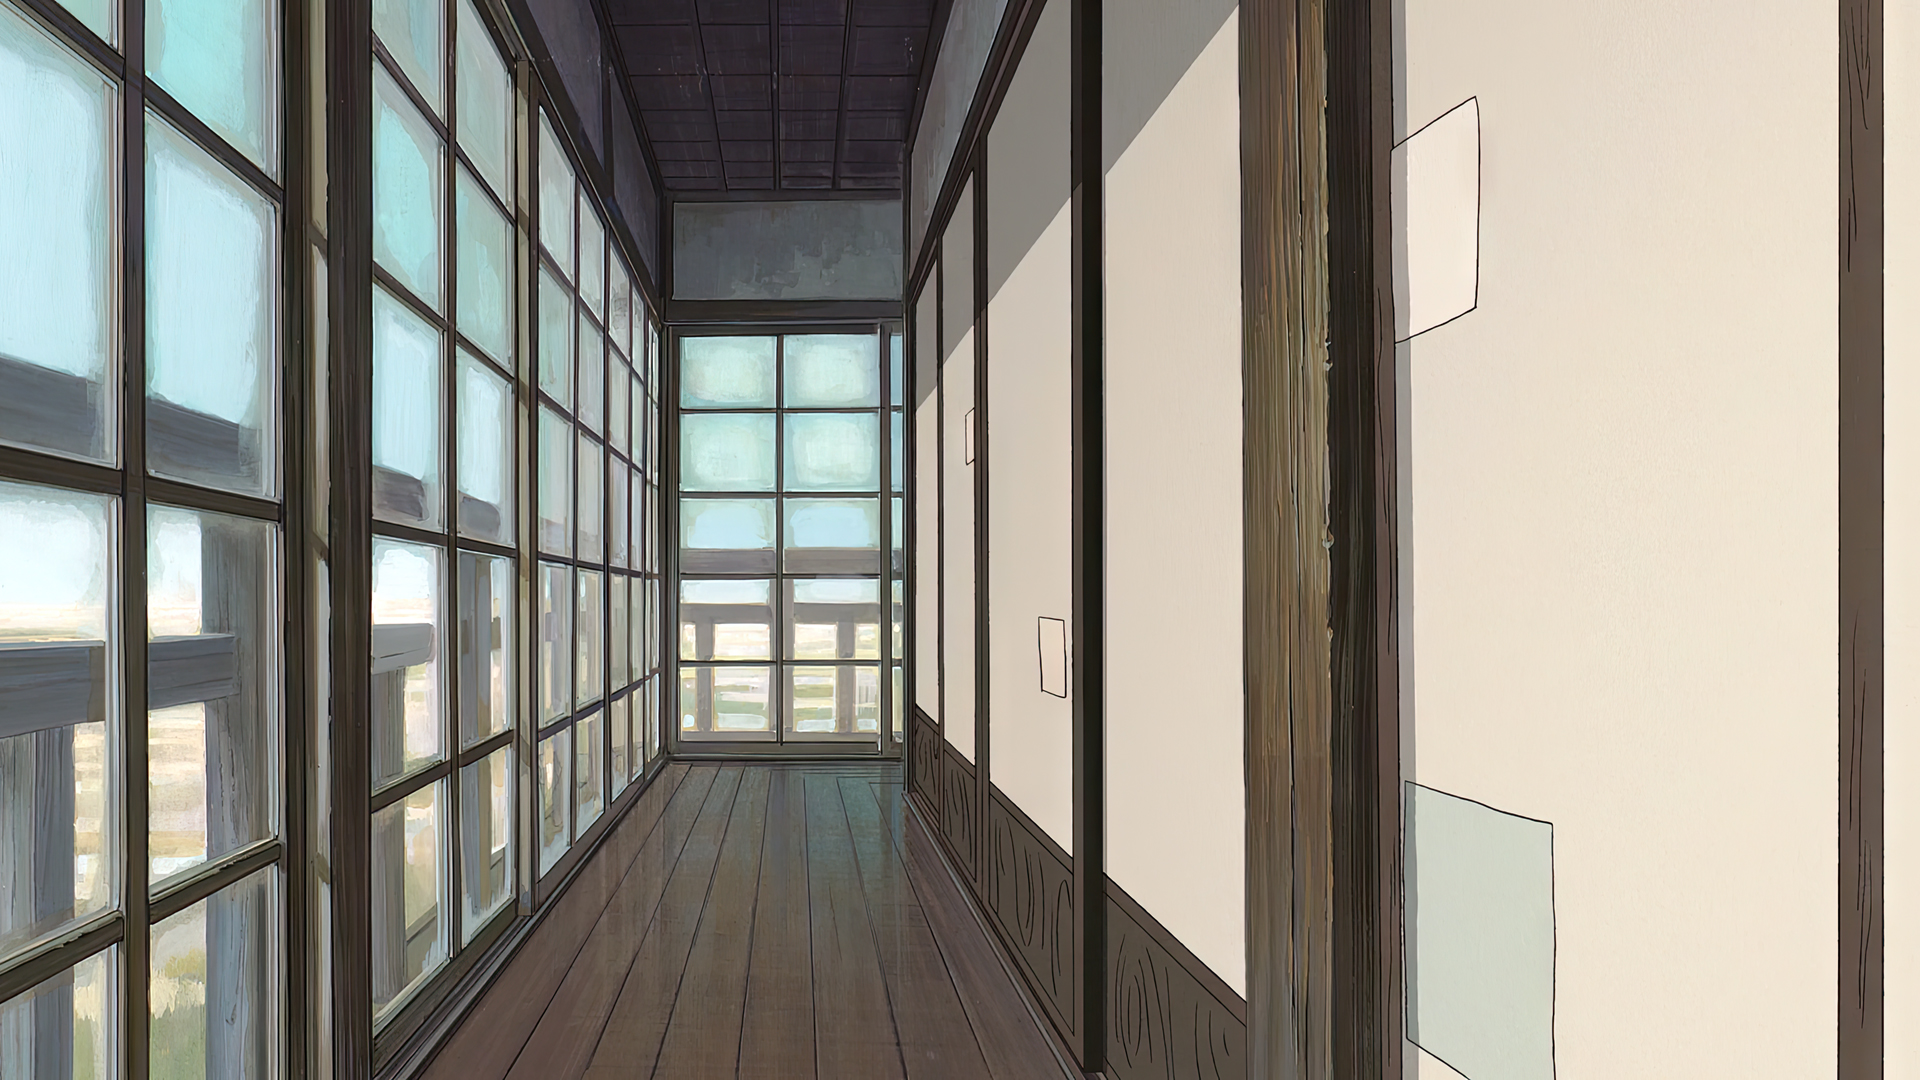 Spirited Away Animated Movies Anime Animation Film Stills Studio Ghibli Hayao Miyazaki Hallway Windo 1920x1080